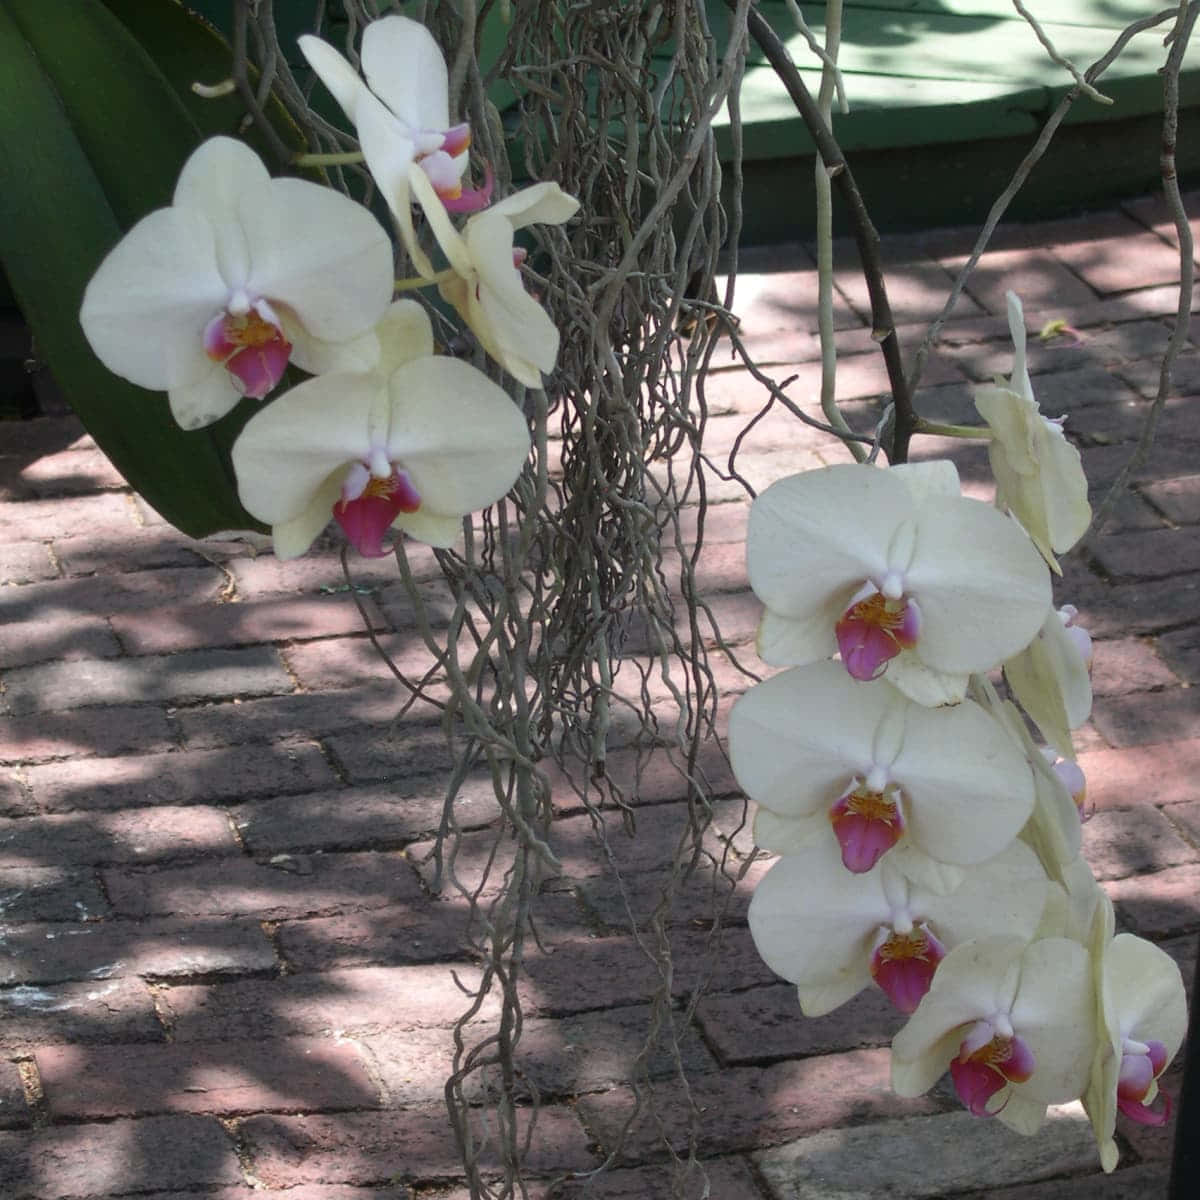 A Natural Beauty - An Orchid Flower